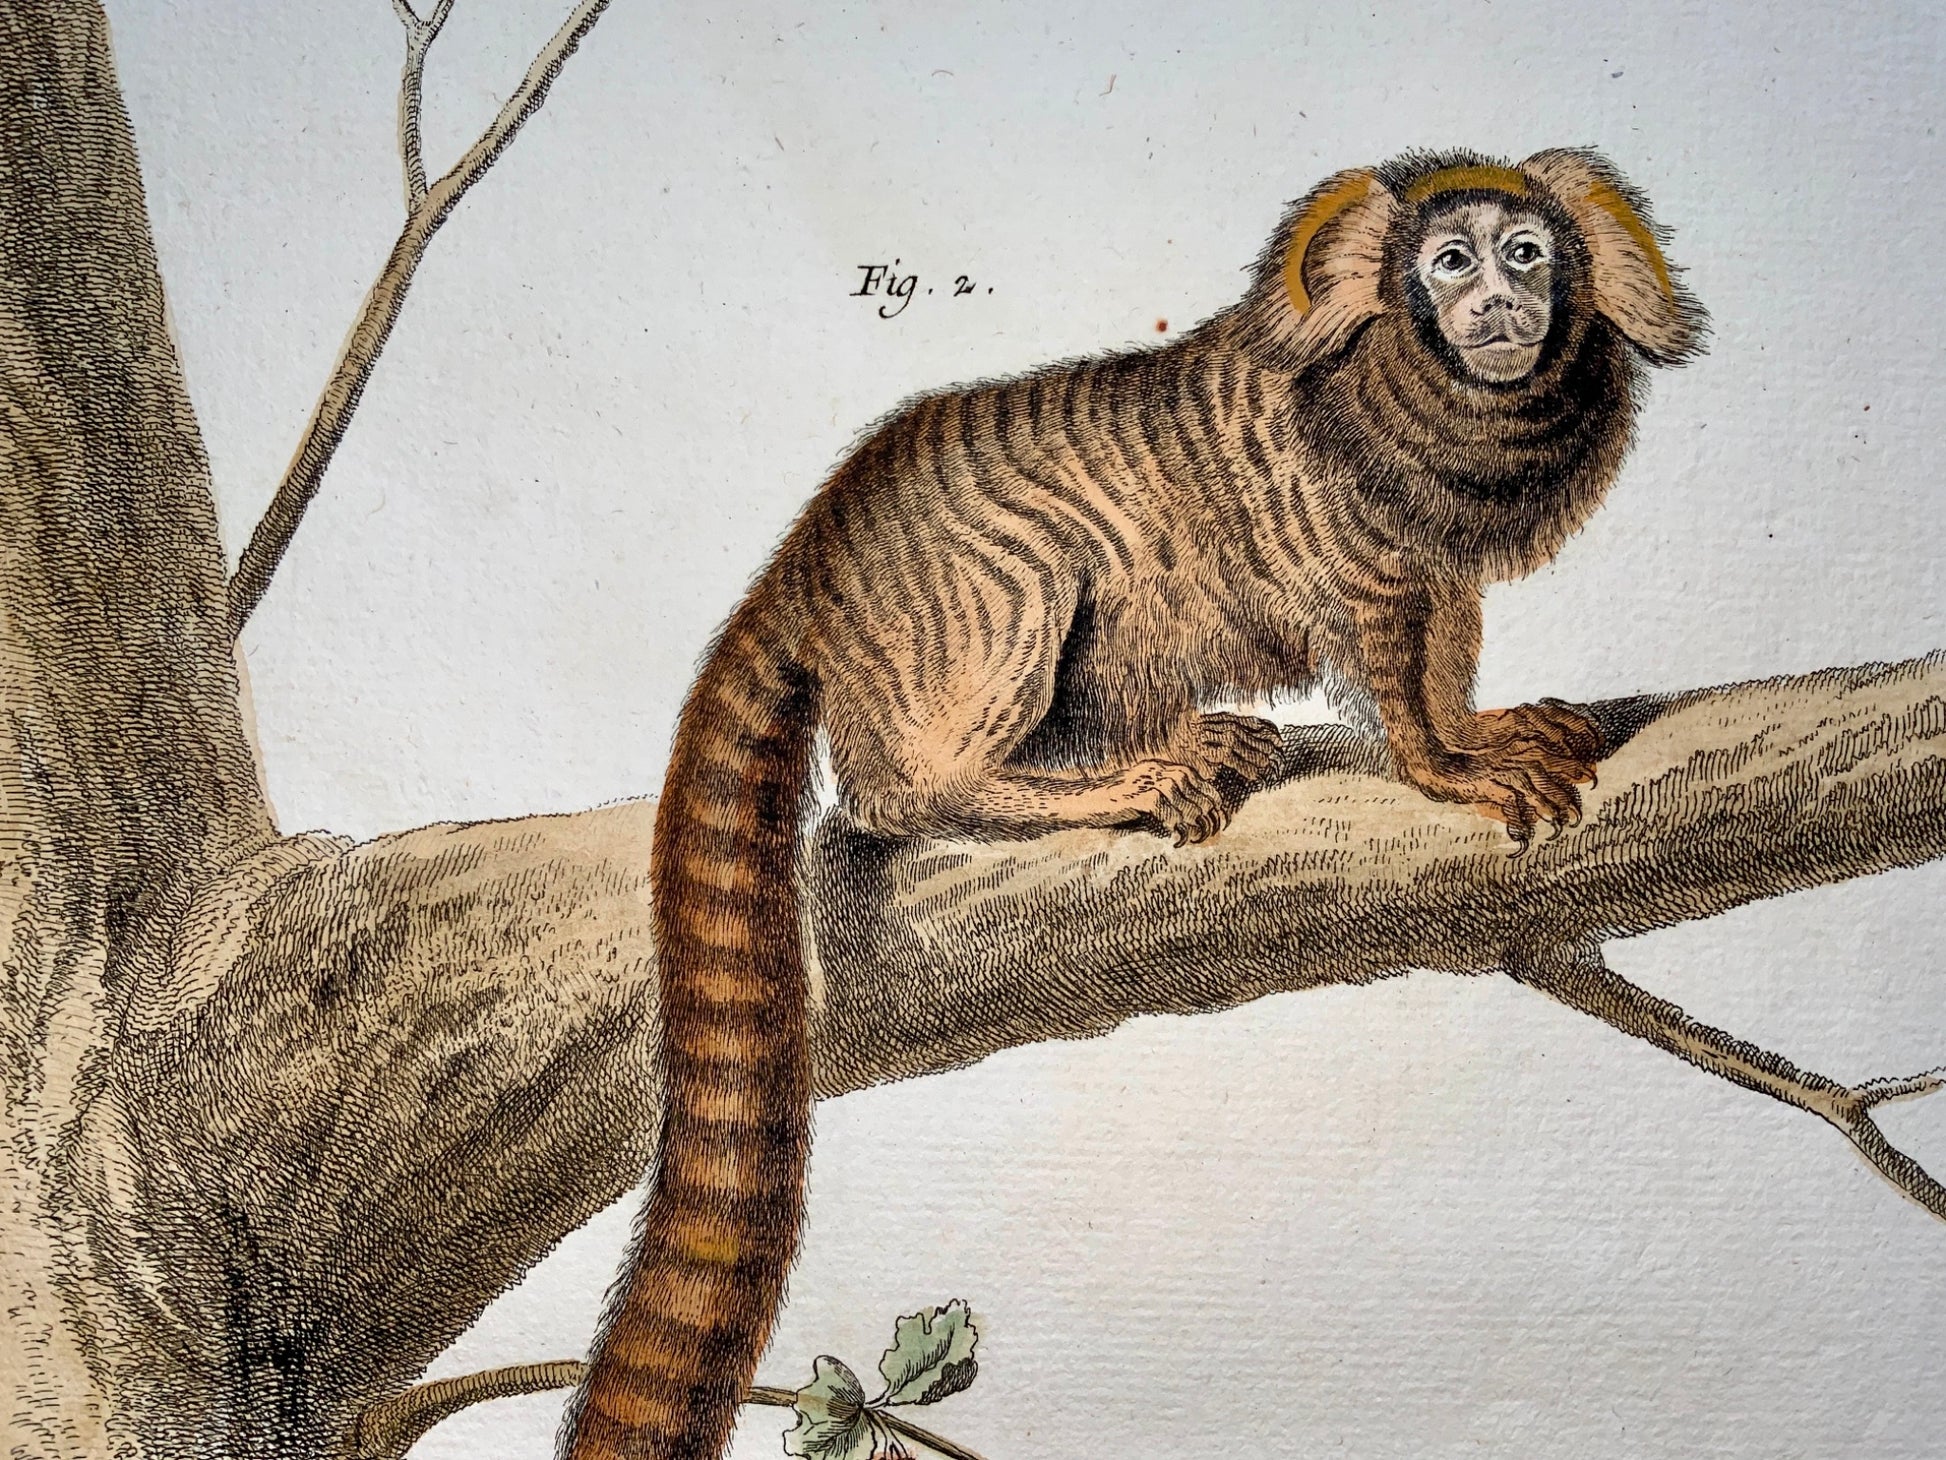 1780 Martinet - TAMARIN MONKEY & CALLITHRIX - hand coloured 38 cm engraving - Mammals